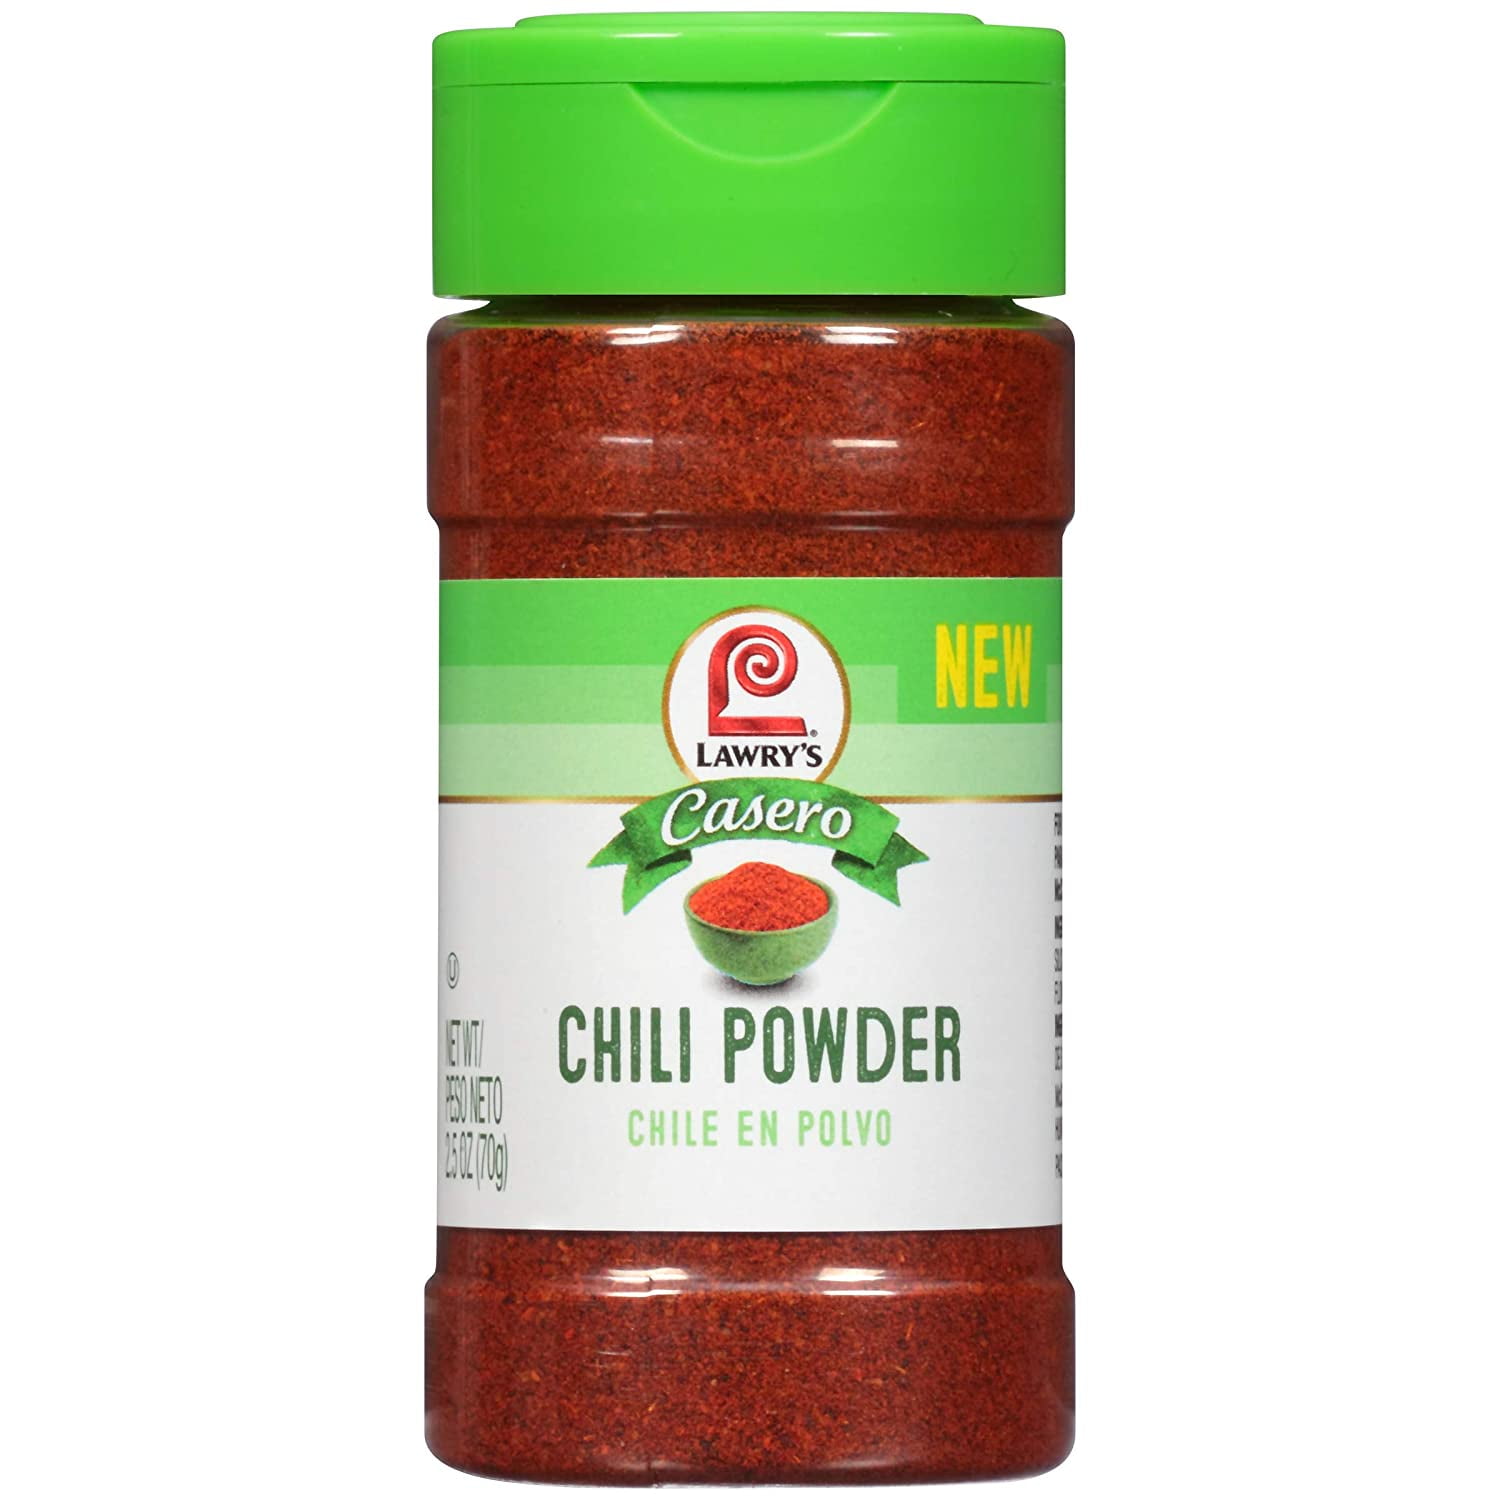 Lawrys Casero Chili Powder, 2.5 oz - Walmart.com - Walmart.com